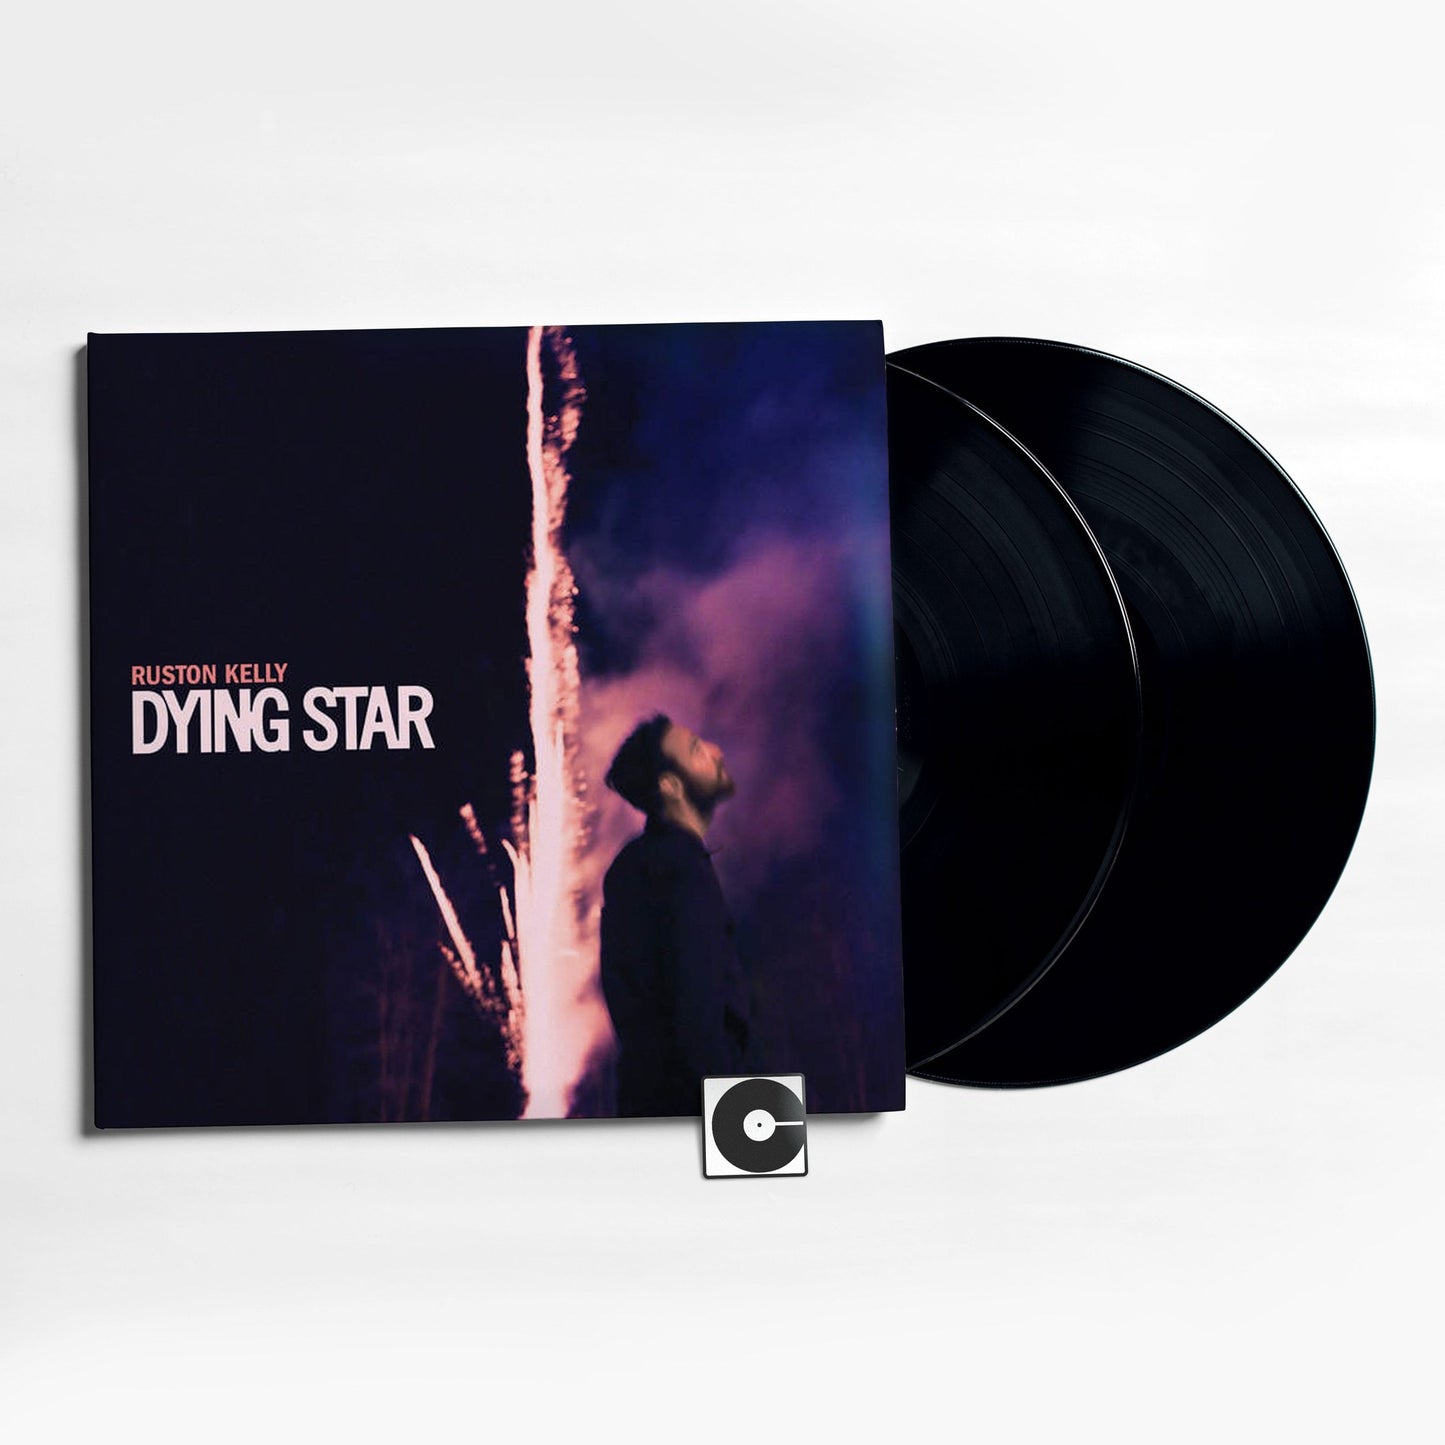 Ruston Kelly - "Dying Star"